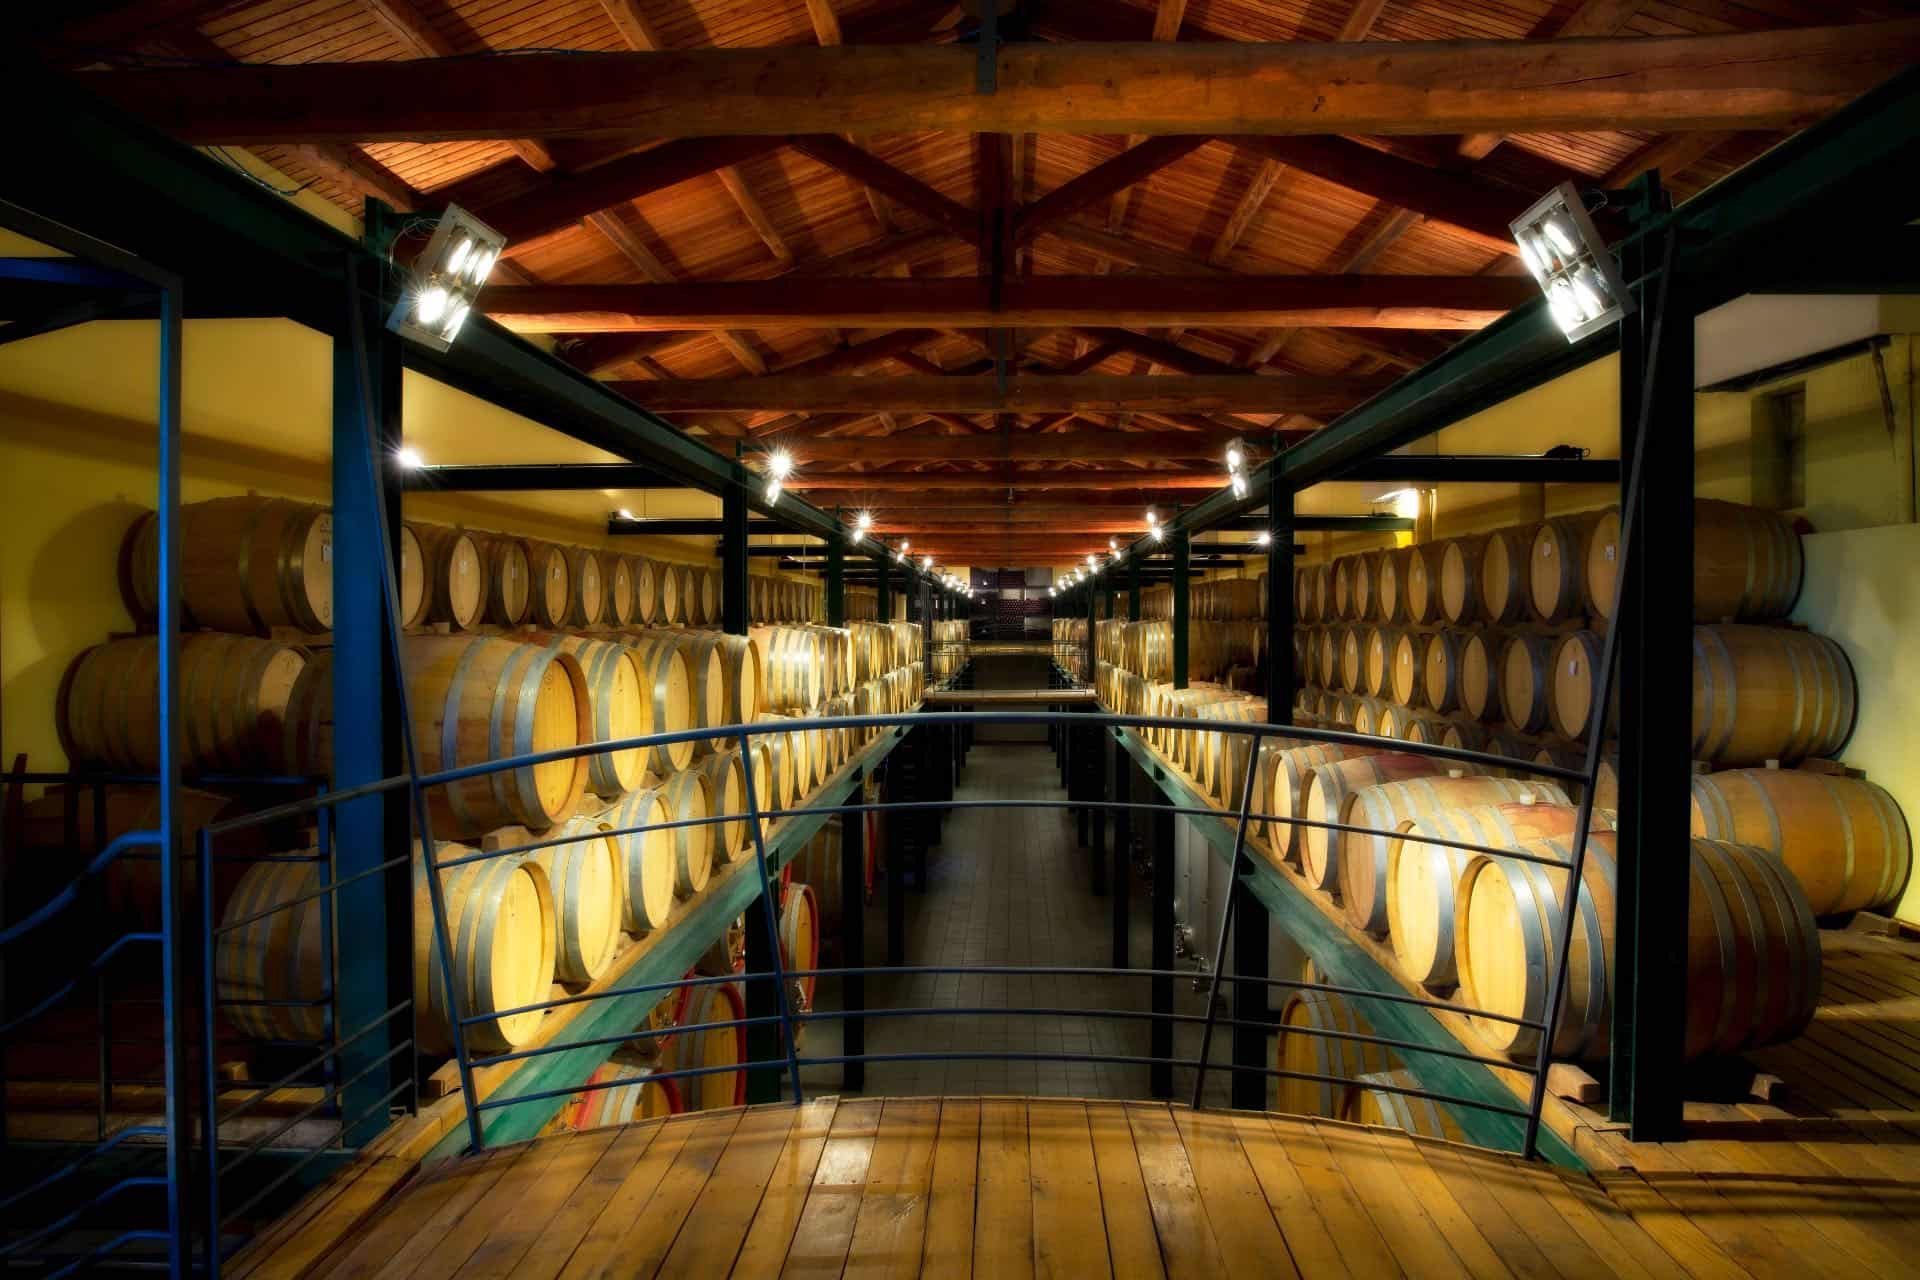 , Cordero di Montezemolo is an exemplar of viticulture six centuries in the making